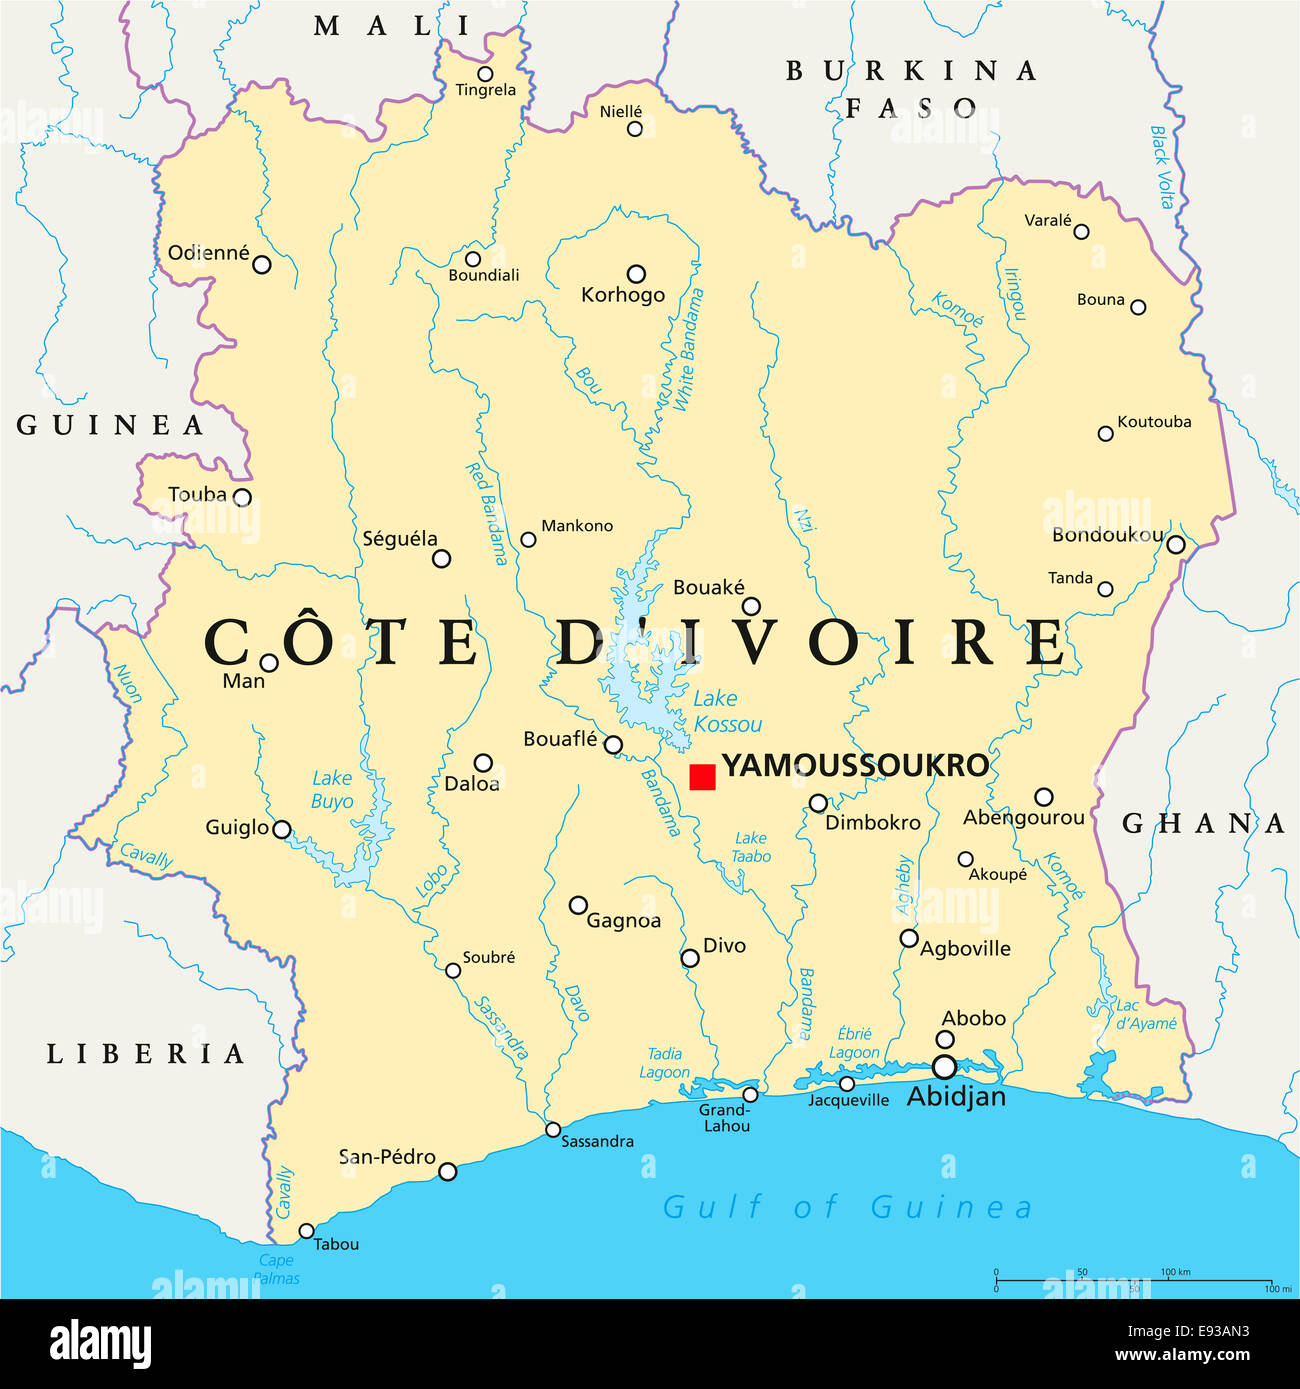 Côte d ' Ivoire politische Karte - Côte d ' Ivoire - Hauptstadt  Yamoussoukro, Landesgrenzen, wichtige Städte, Flüsse und Seen  Stockfotografie - Alamy